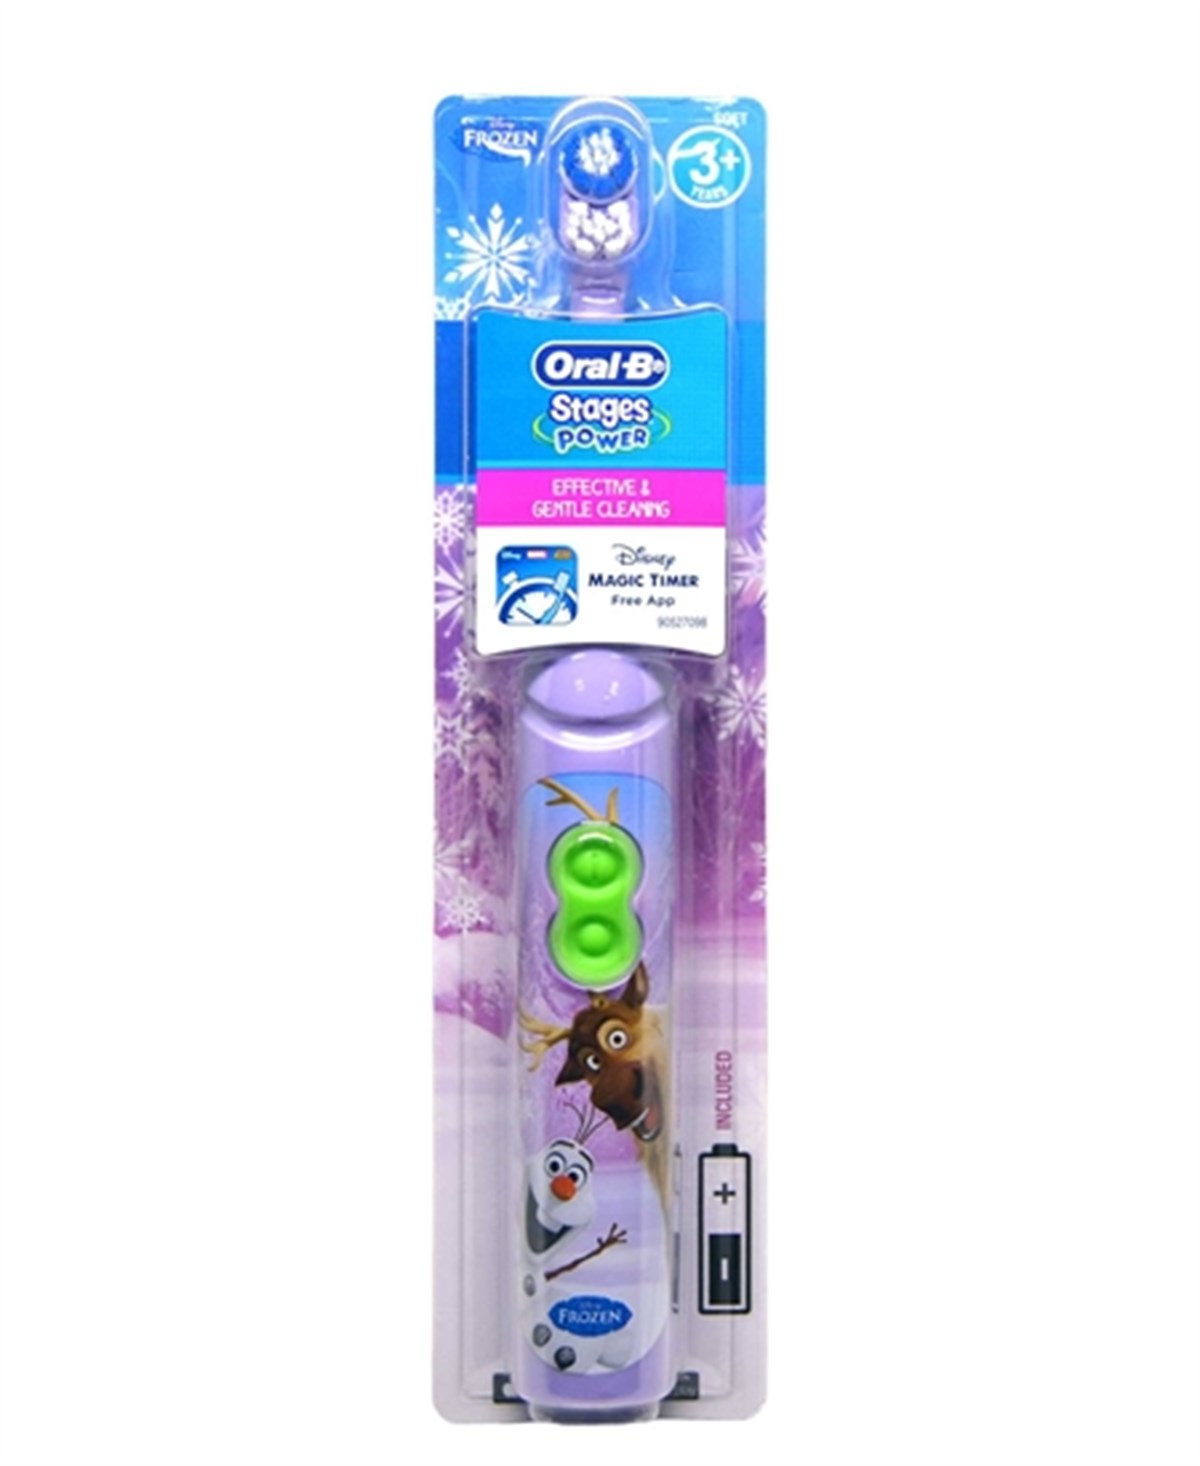 Gres kirpik Yaşlı adam  Oral-B Kids Frozen Toothbrush Battery Power for Children and  Toddlers-LeylekKapida.com